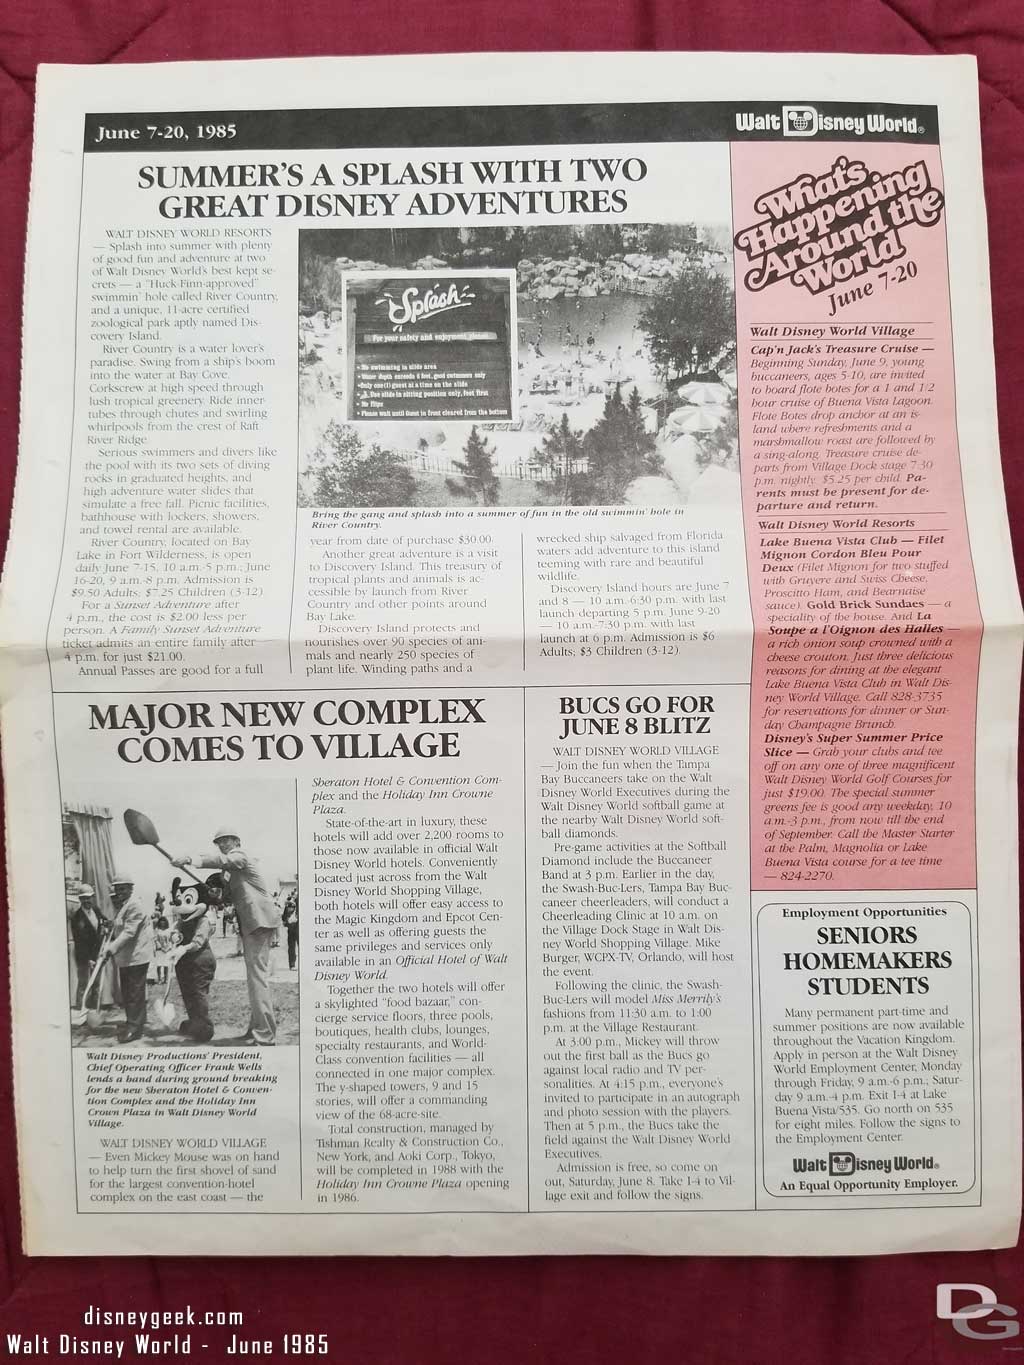 Walt Disney World News - June 7-21, 1985 Back Page